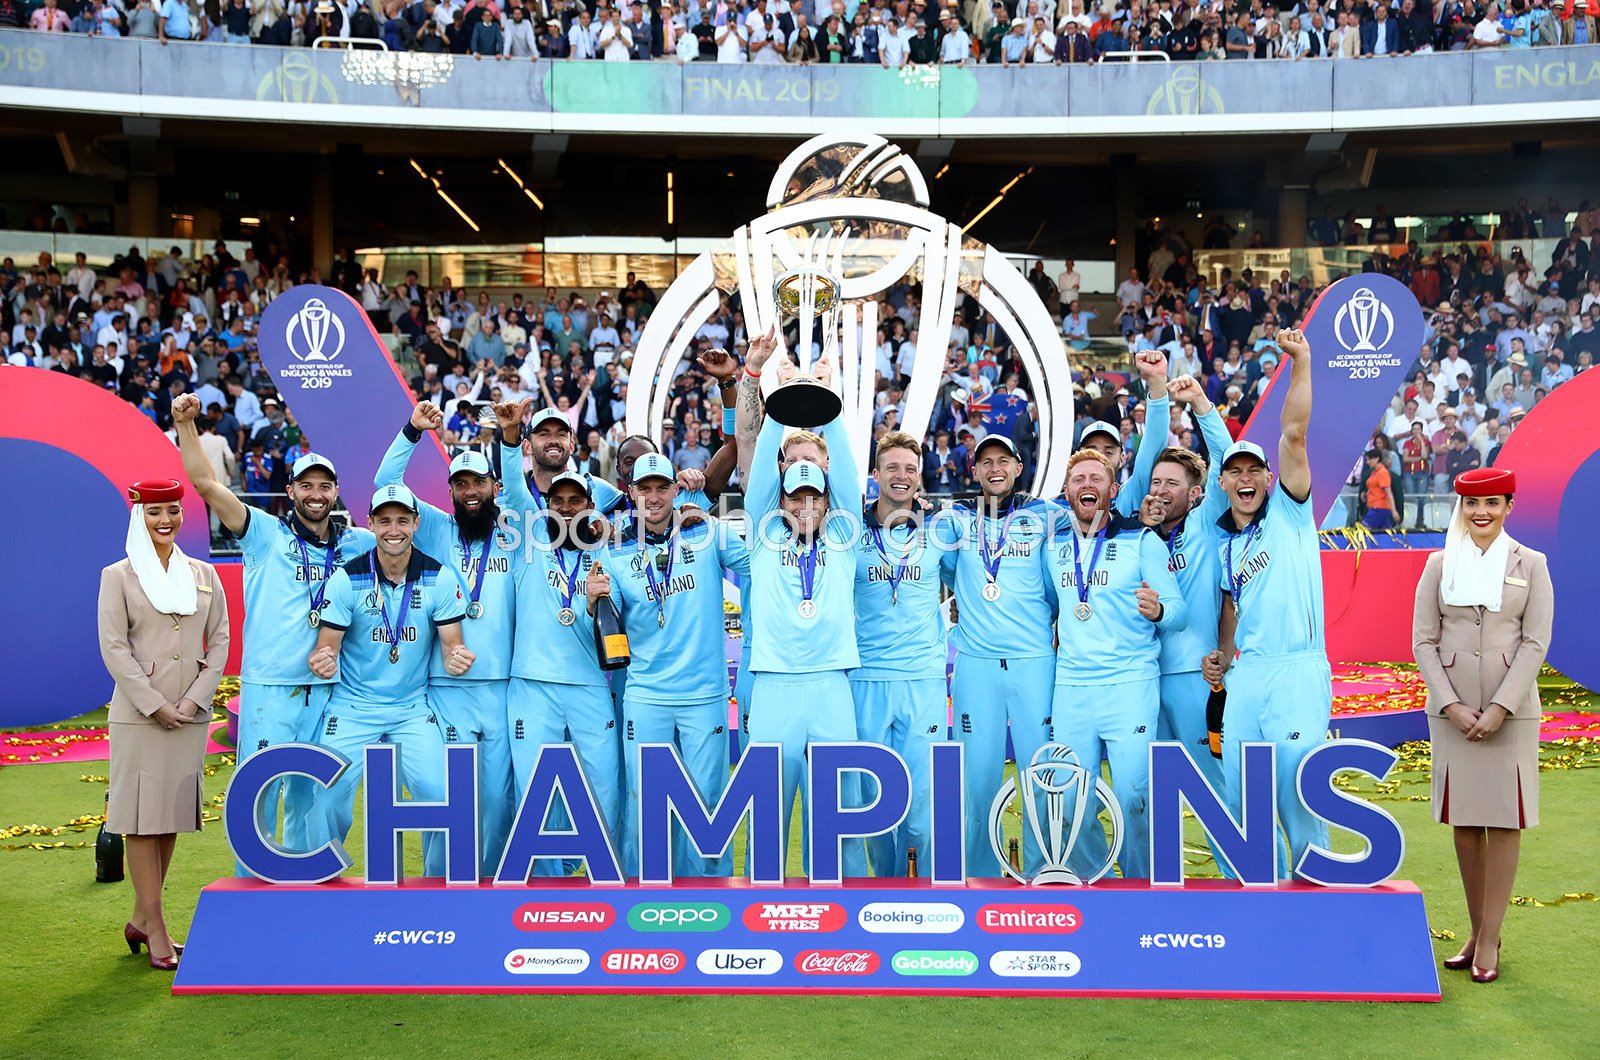 bestøve kampagne Majestætisk England World Champions World Cup Final Lord's 2019 Images | Cricket Posters